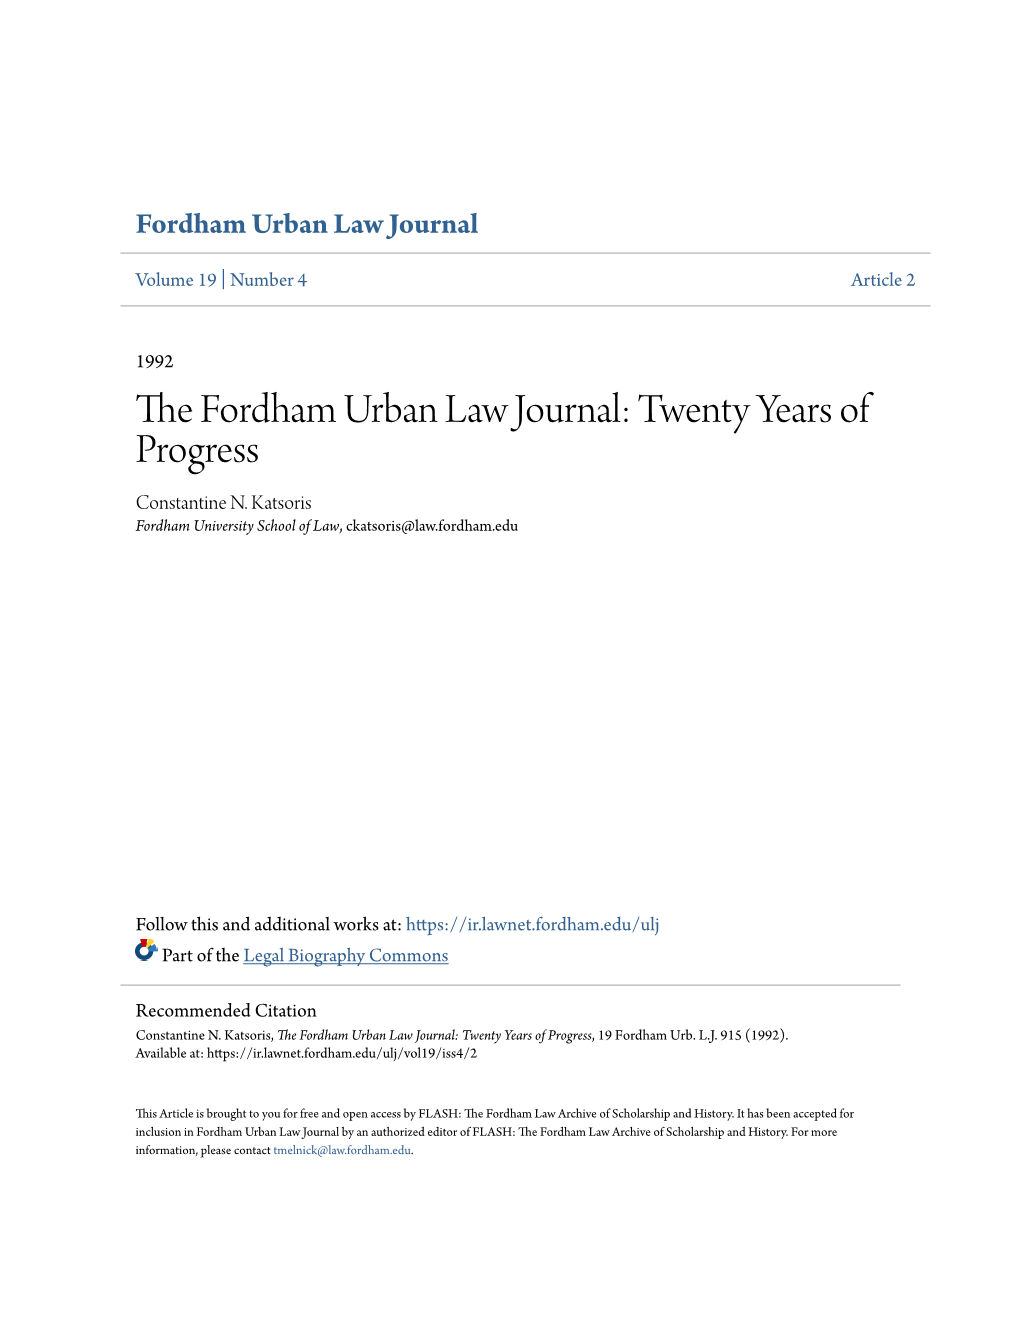 The Fordham Urban Law Journal: Twenty Years of Progress, 19 Fordham Urb